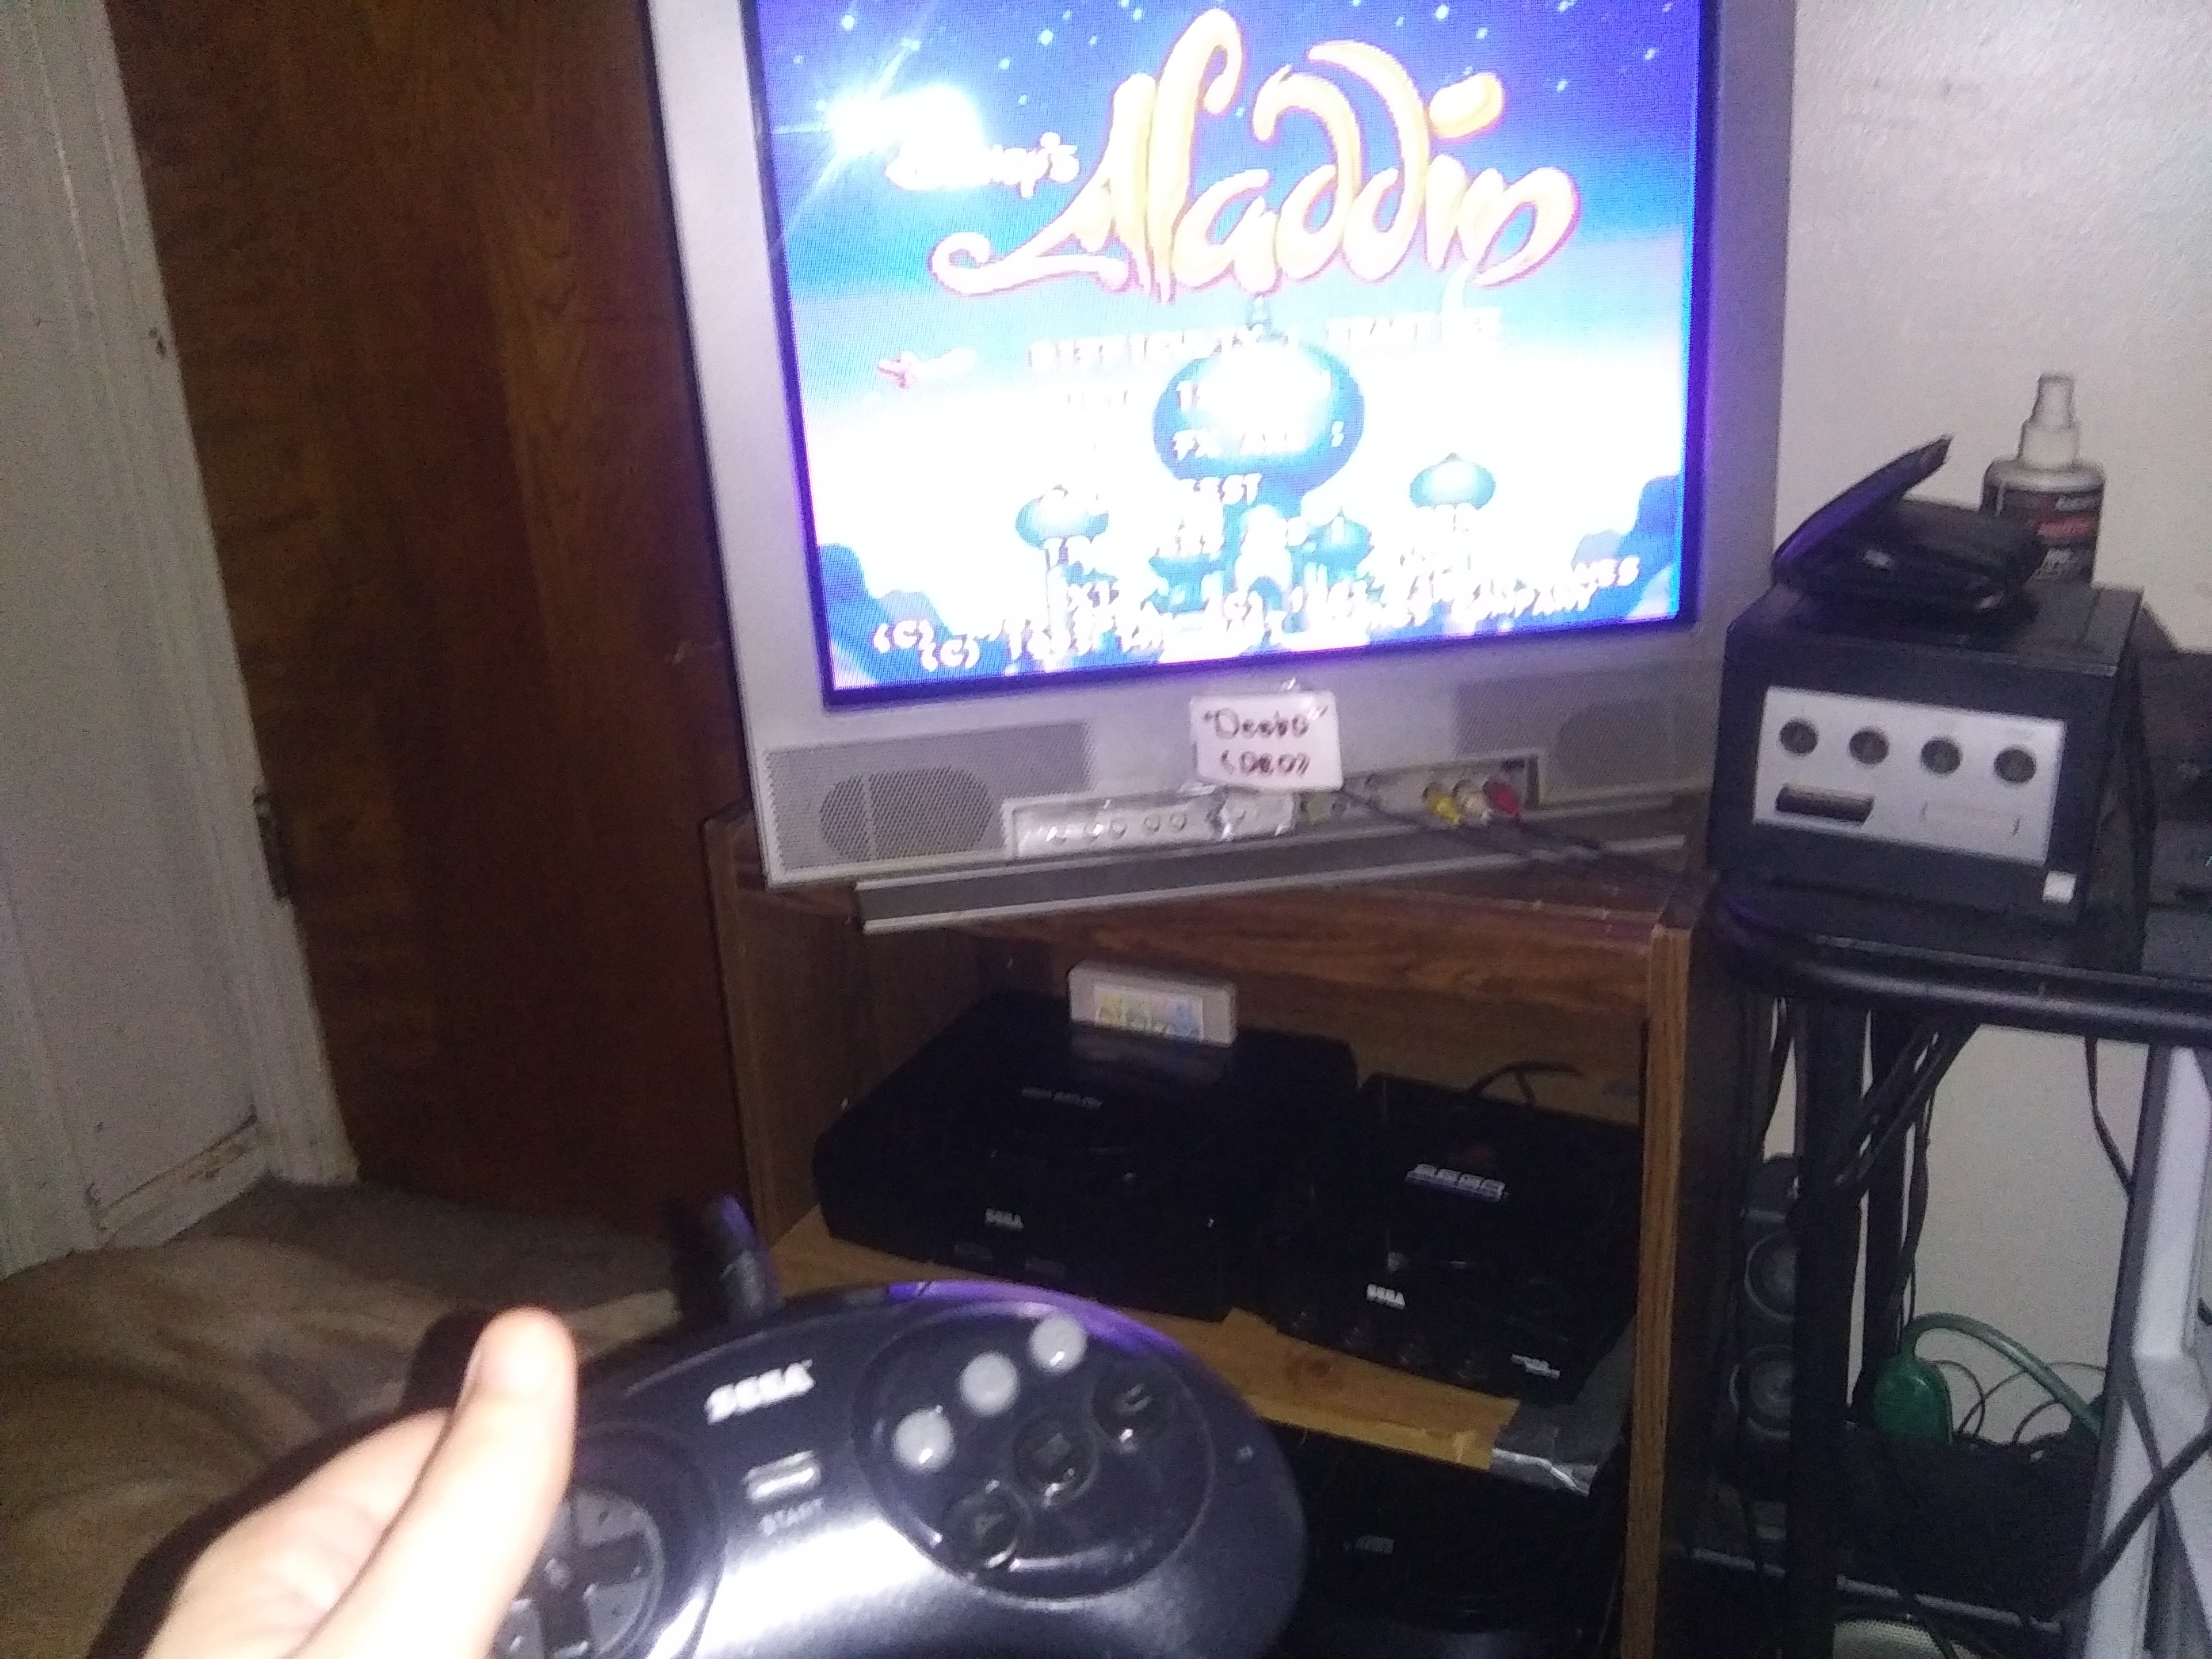 Deebo: Aladdin [Easy] (Sega Genesis / MegaDrive) 1,400 points on 2019-07-16 23:40:07